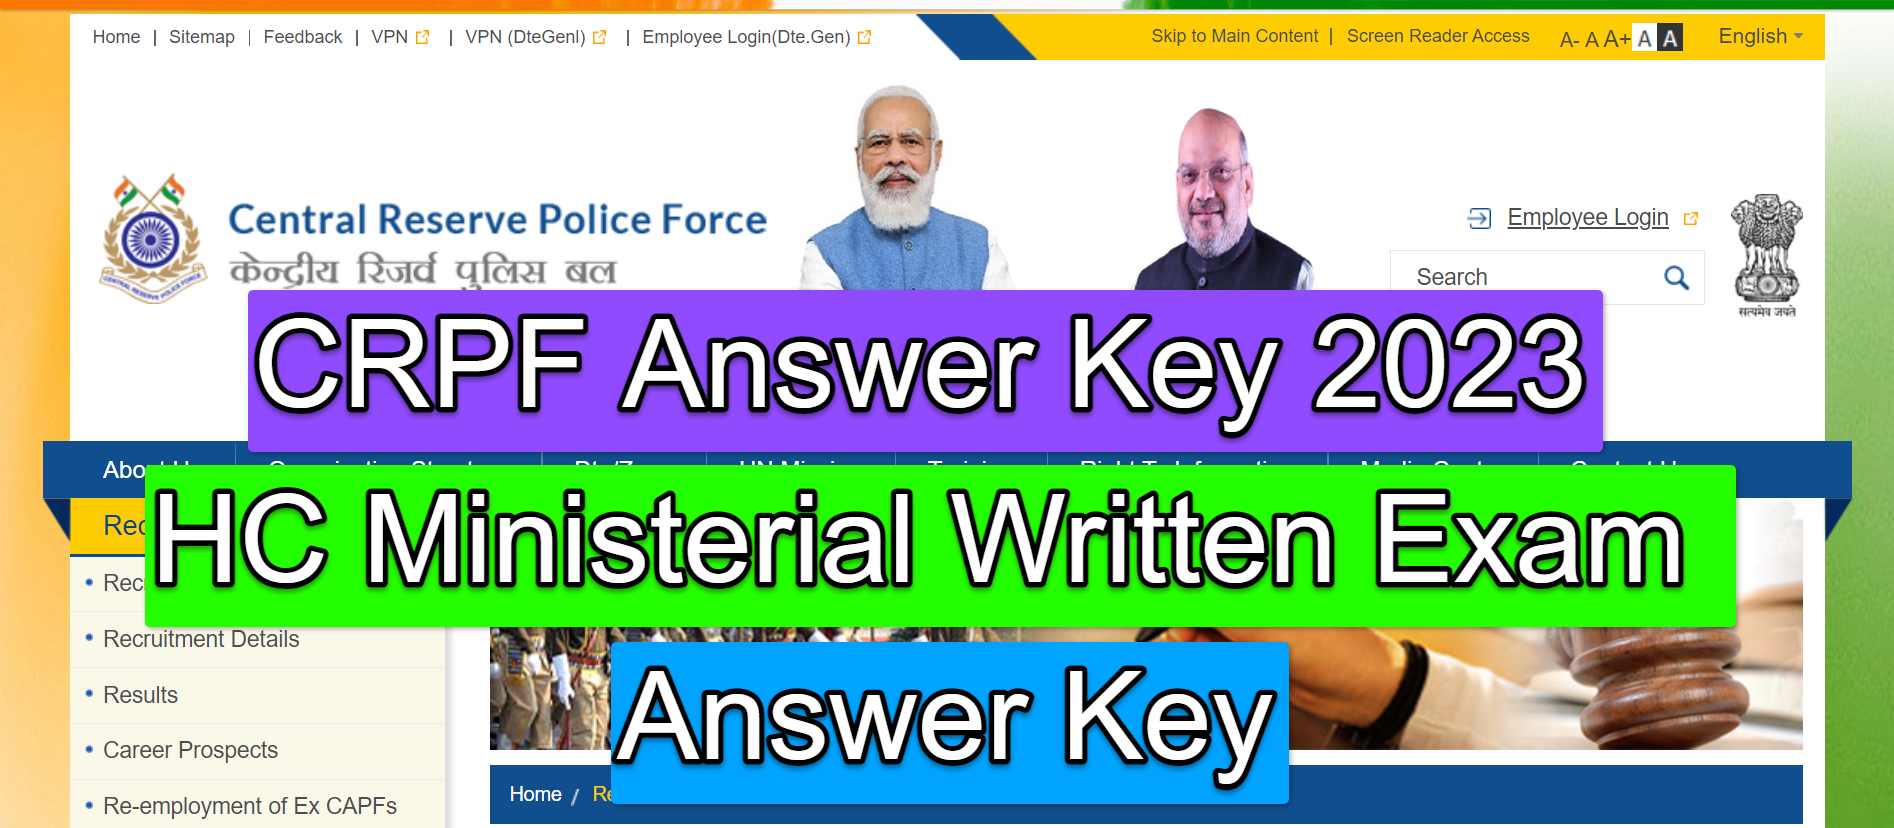 CRPF Answer Key 2023 - HC Ministerial Written Exam Answer Key